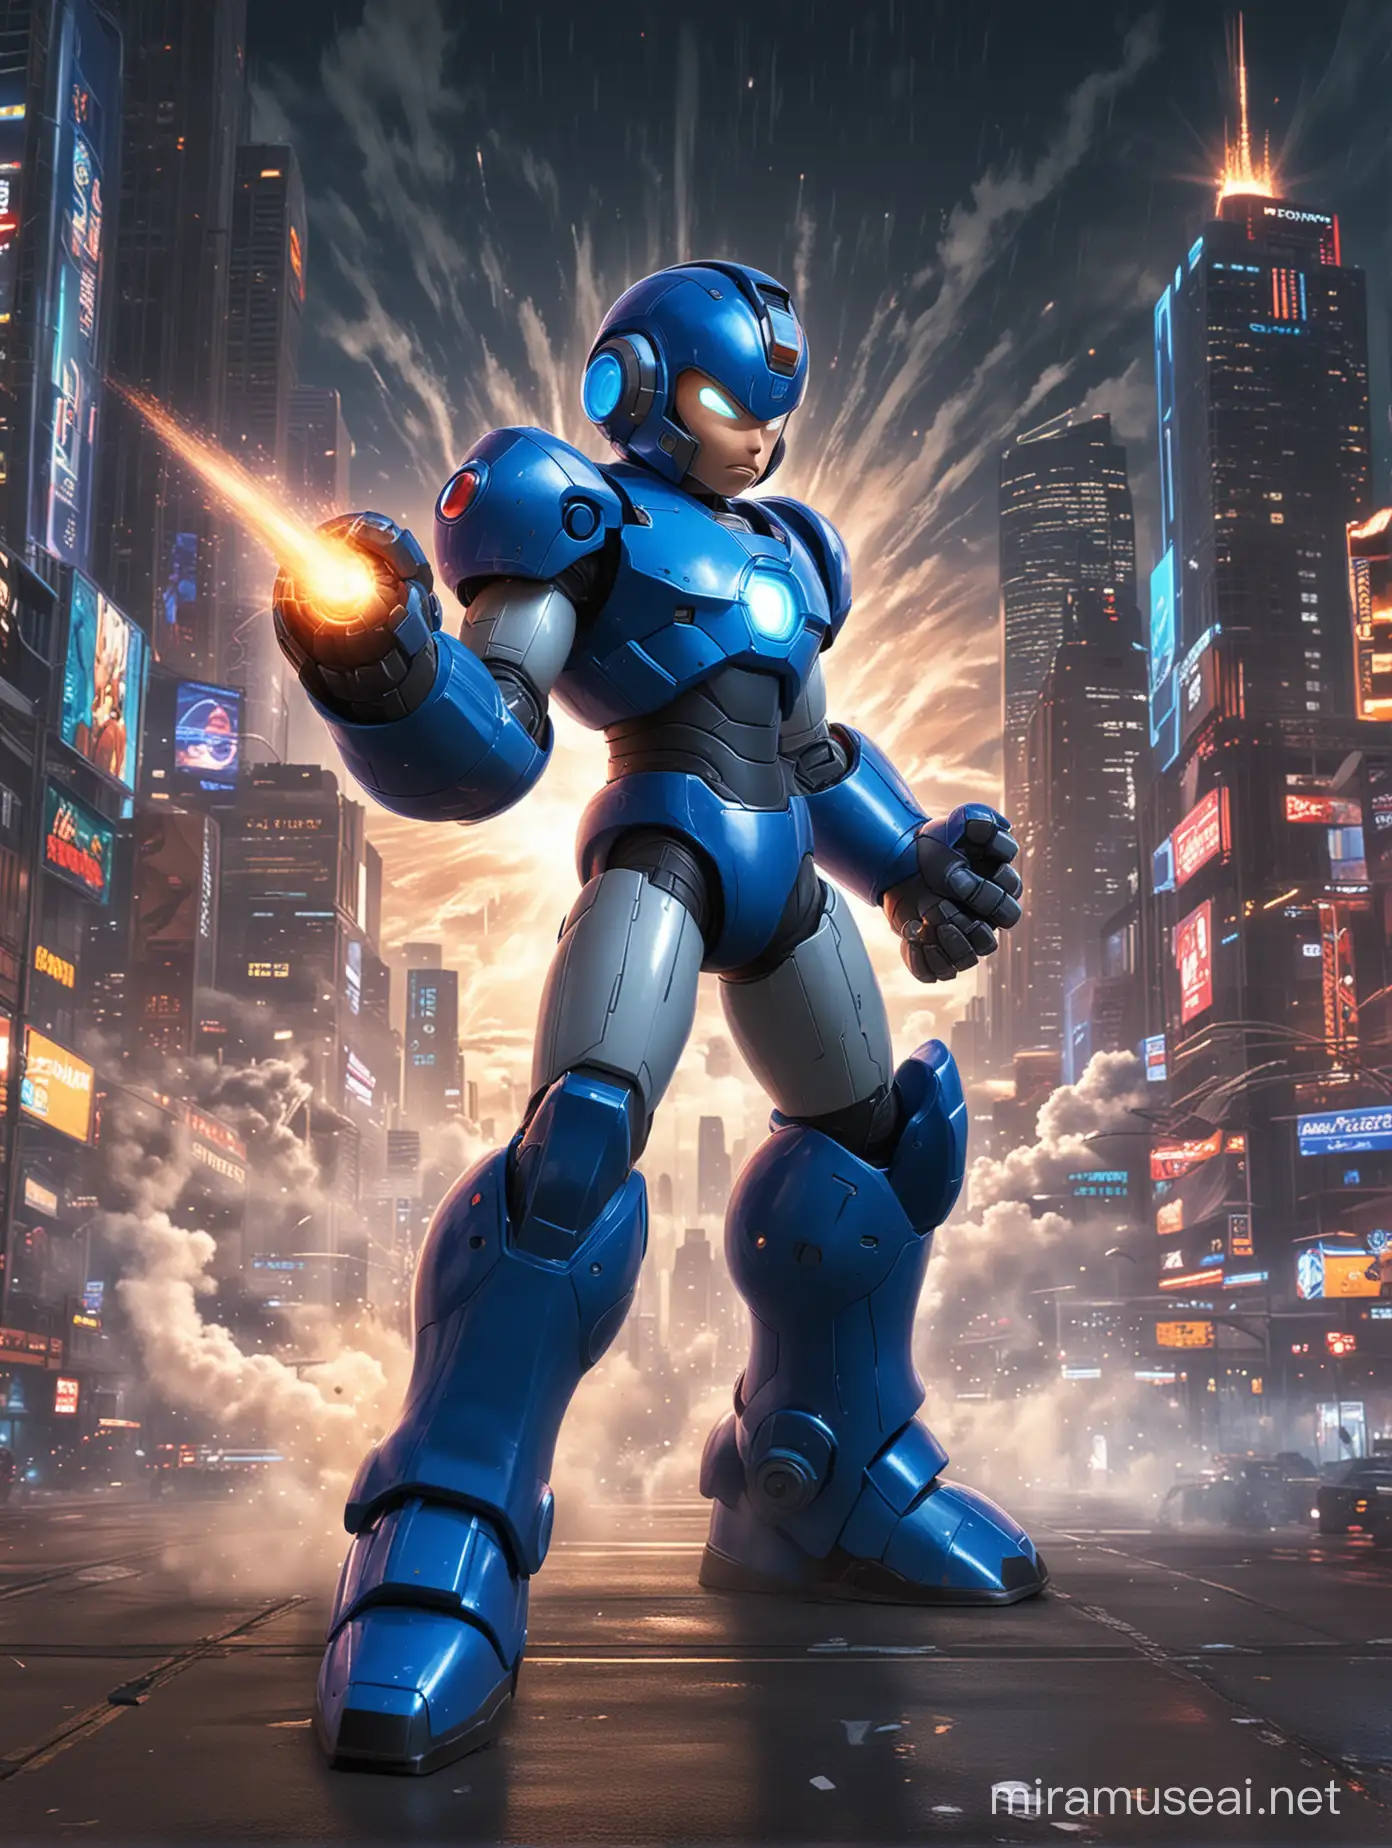 Mega Man Shooting Blast Arm in Futuristic Cityscape